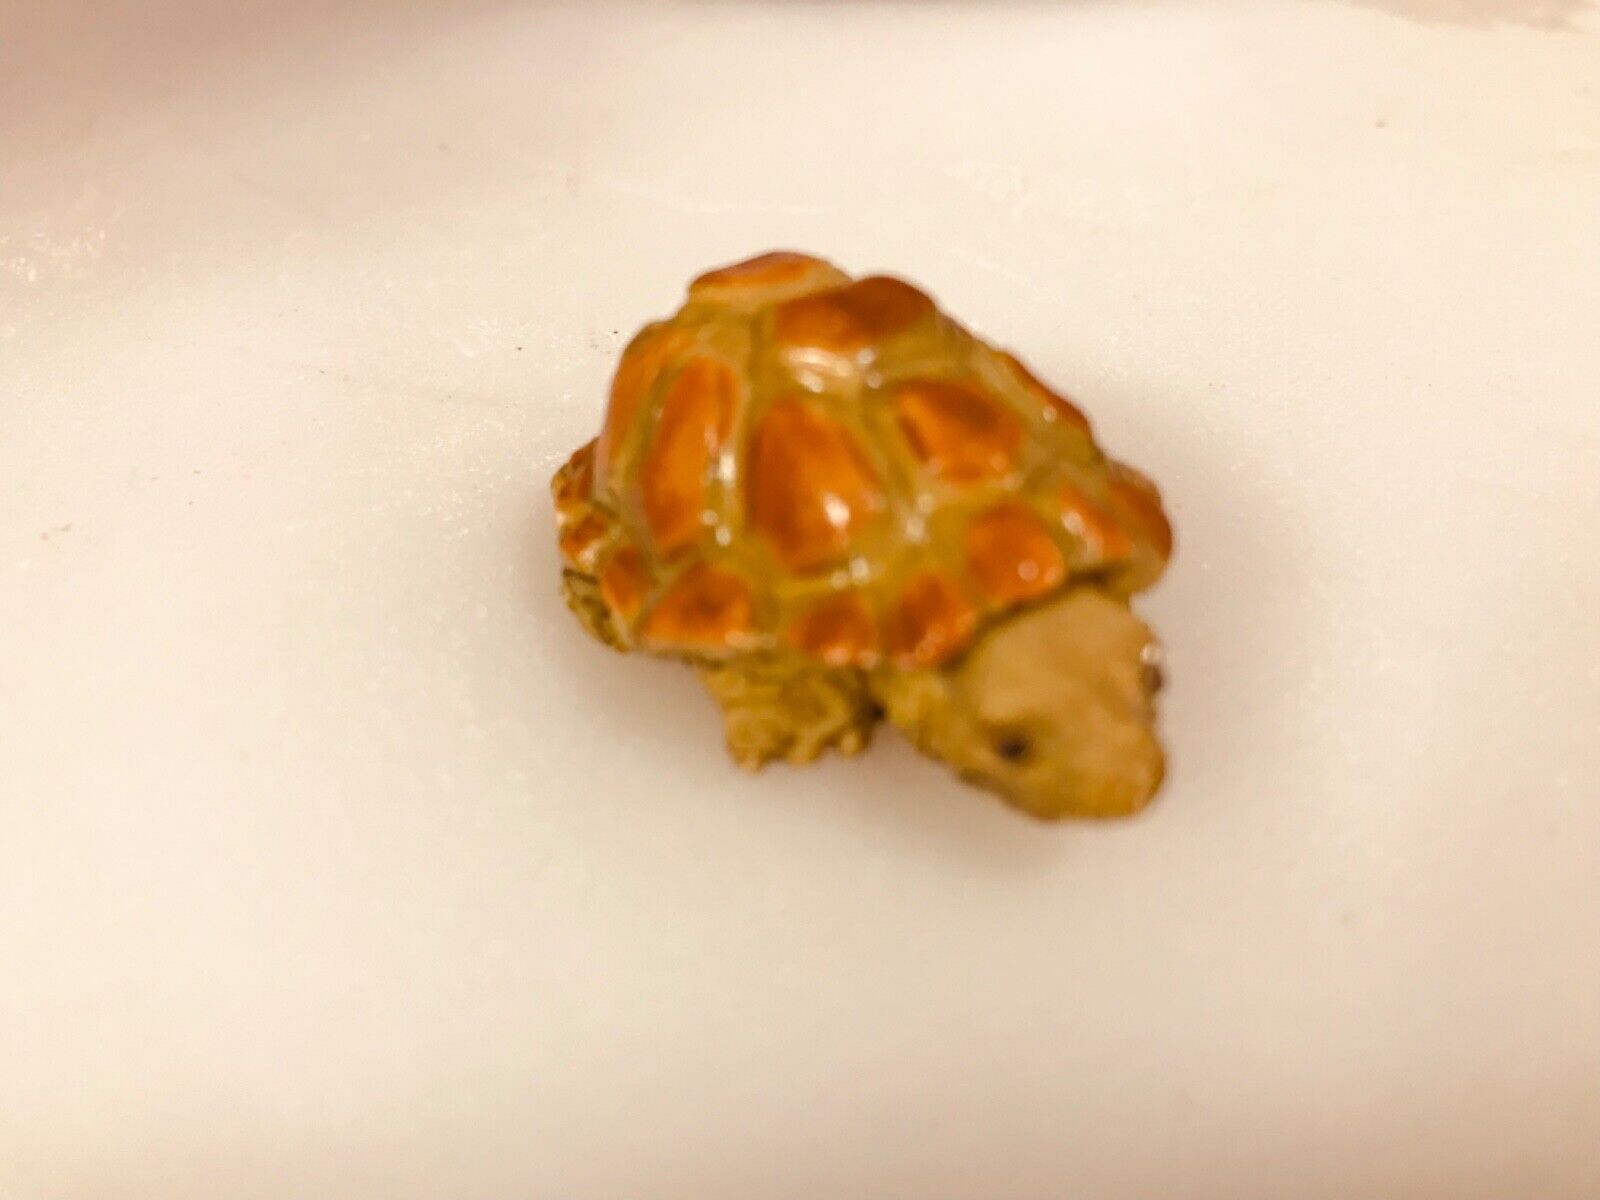 1 small turtle figurine, preowned